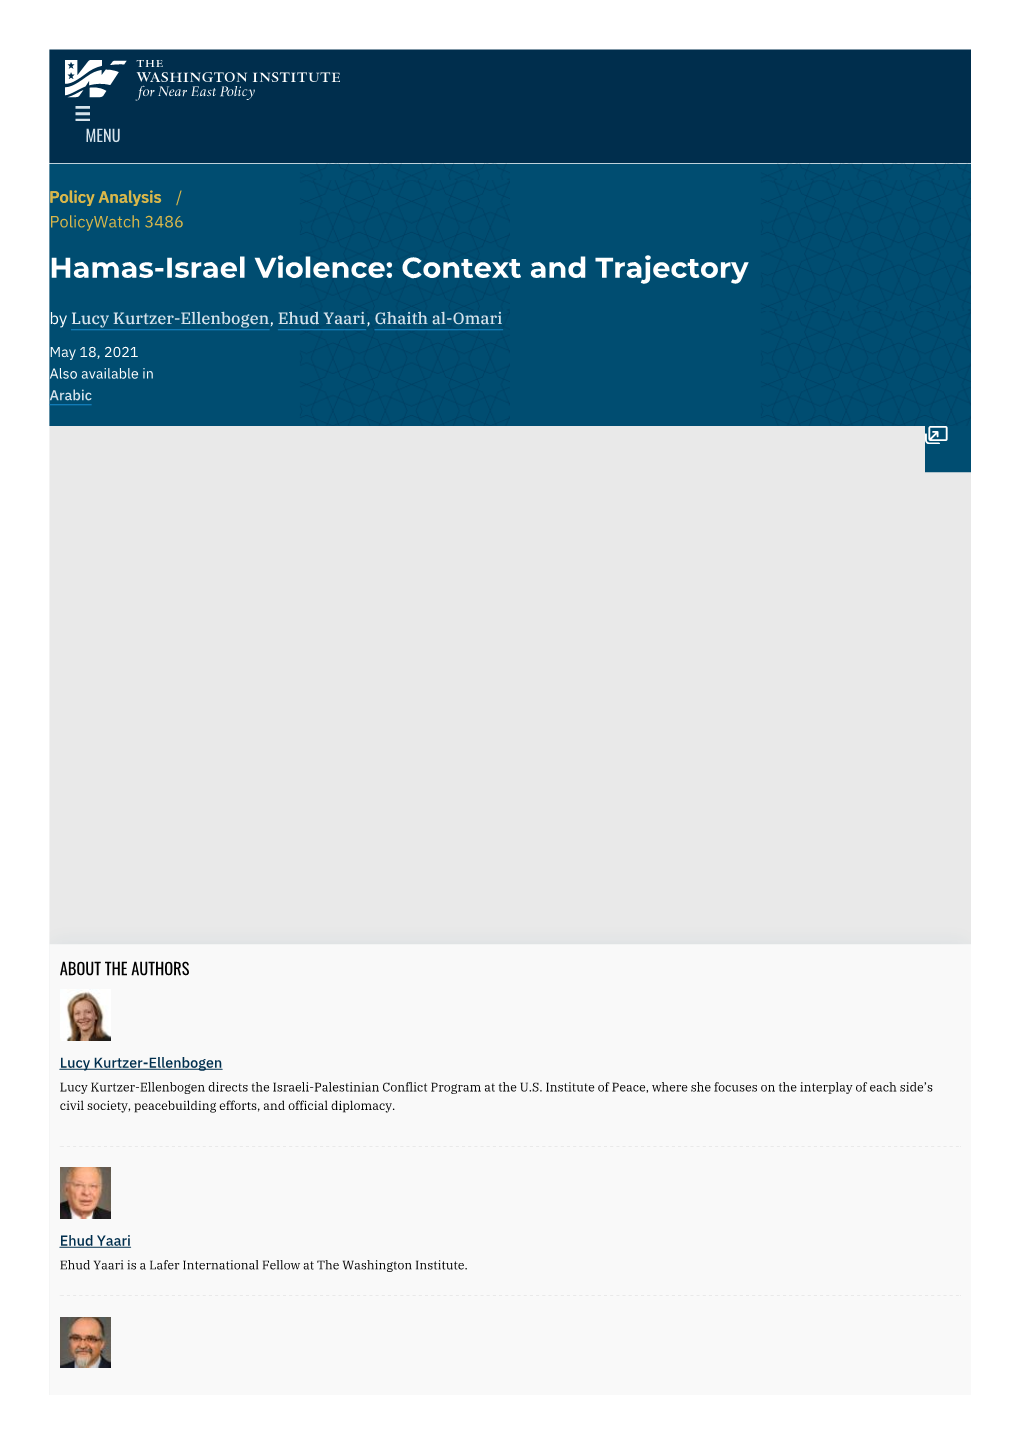 Hamas-Israel Violence: Context and Trajectory by Lucy Kurtzer-Ellenbogen, Ehud Yaari, Ghaith Al-Omari